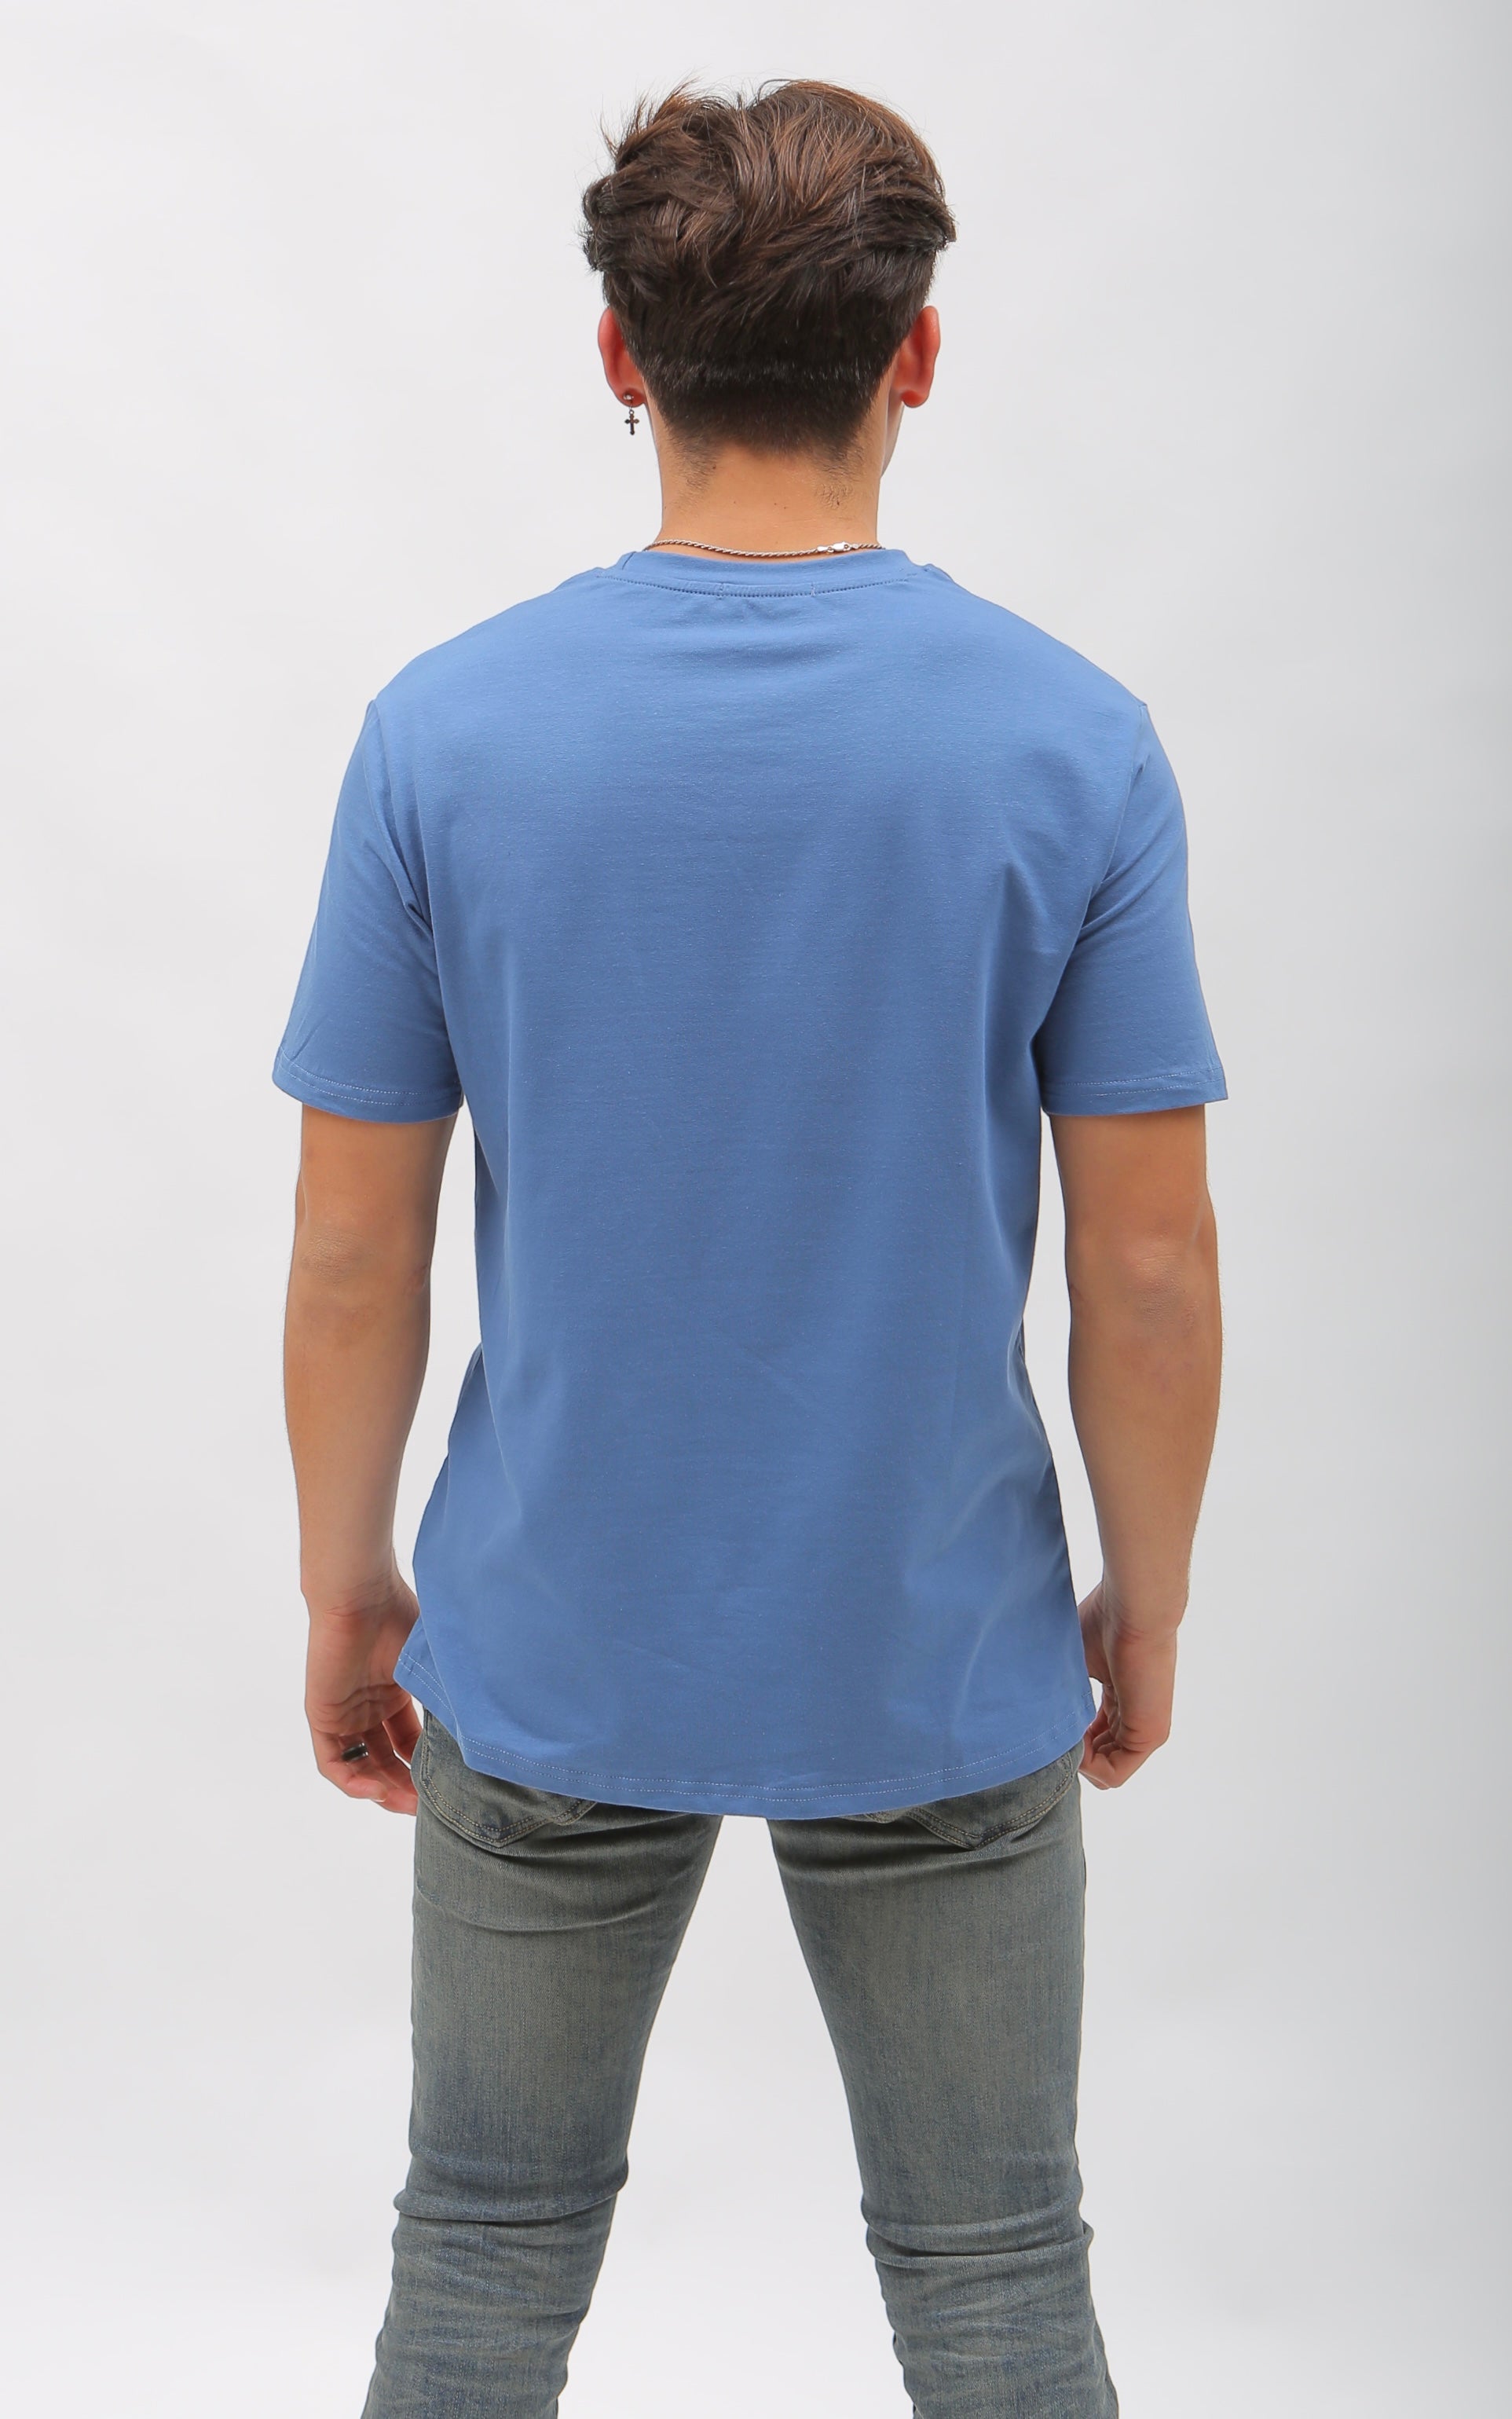 Reflective 3M Signature Blue T Shirt